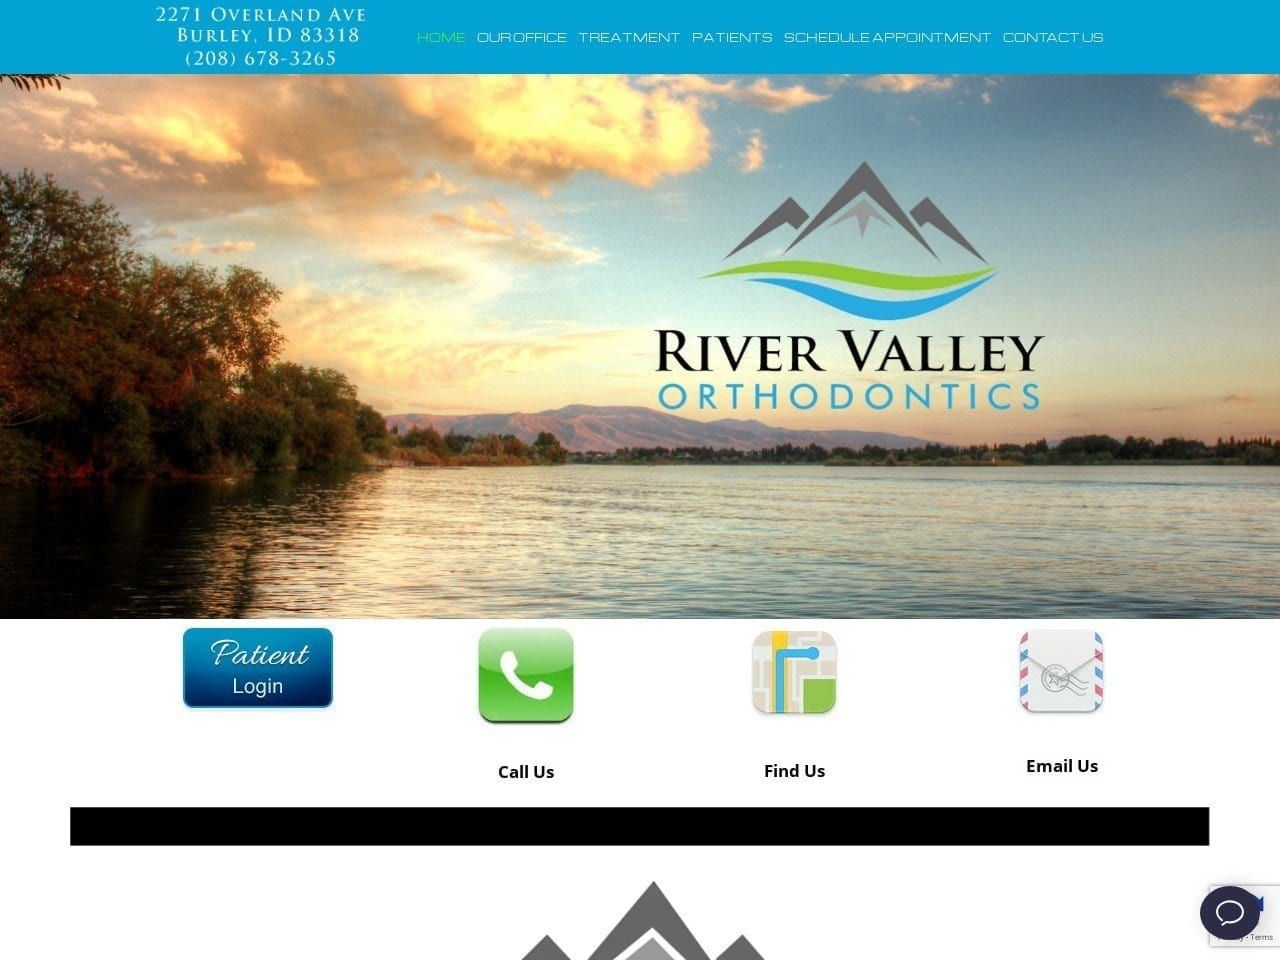 River Valley Orthodontics Justin D. Ward DMD MSD Website Screenshot from rivervalleyorthodontics.com